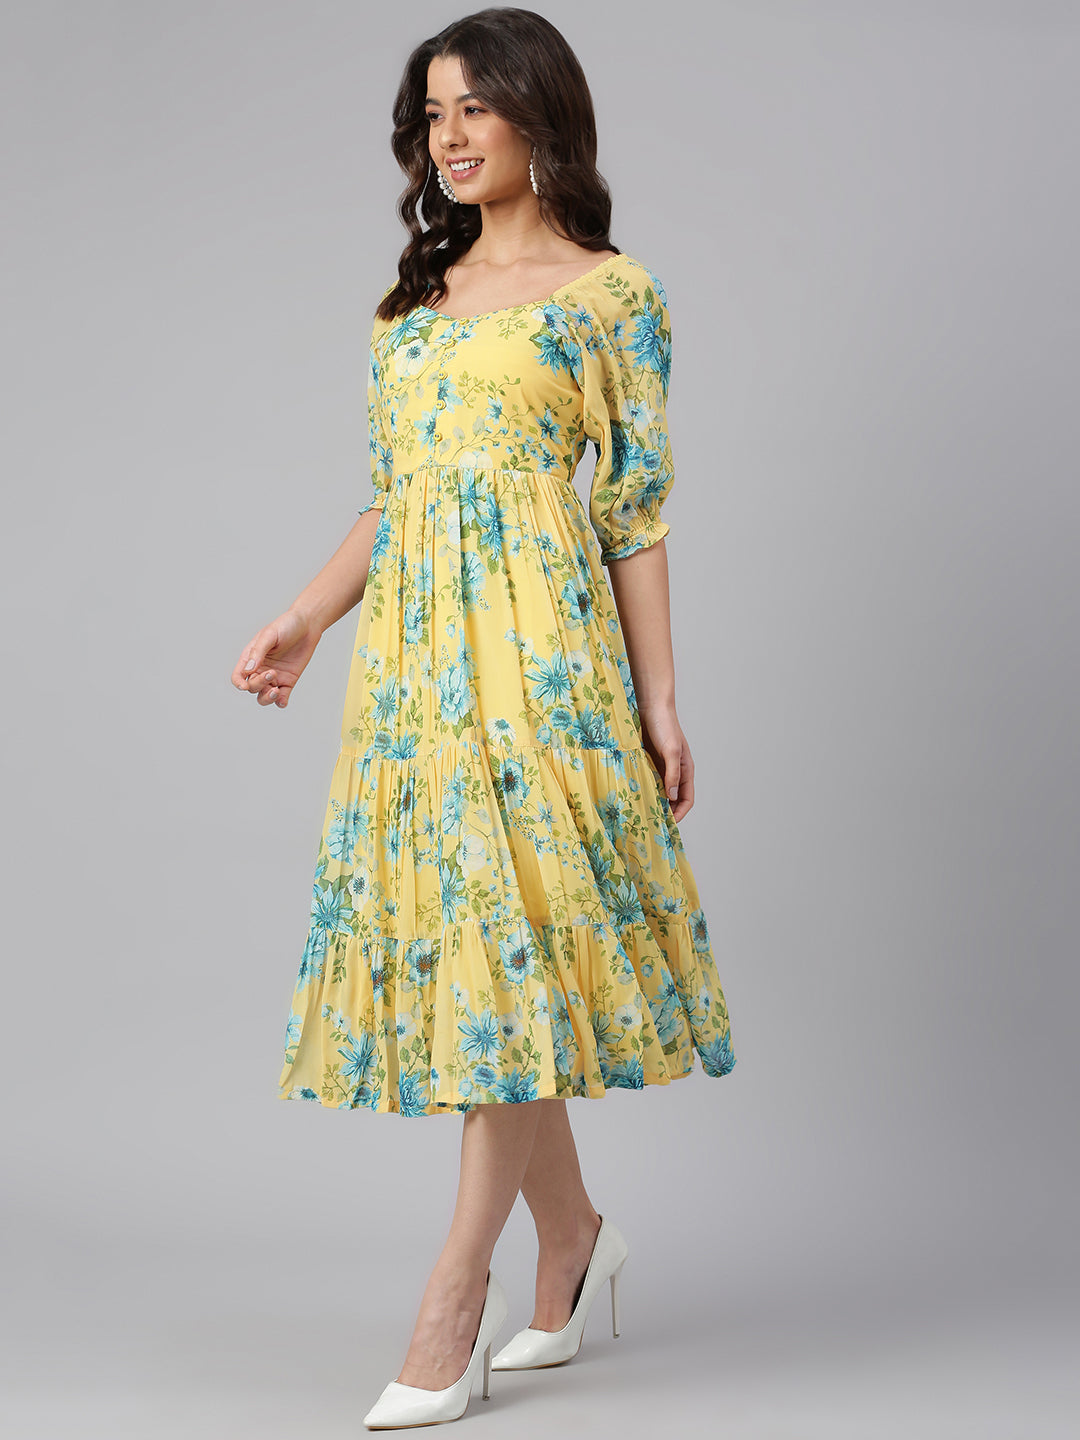 Women's Floral Printed Yellow Georgette Dress - Janasya USA